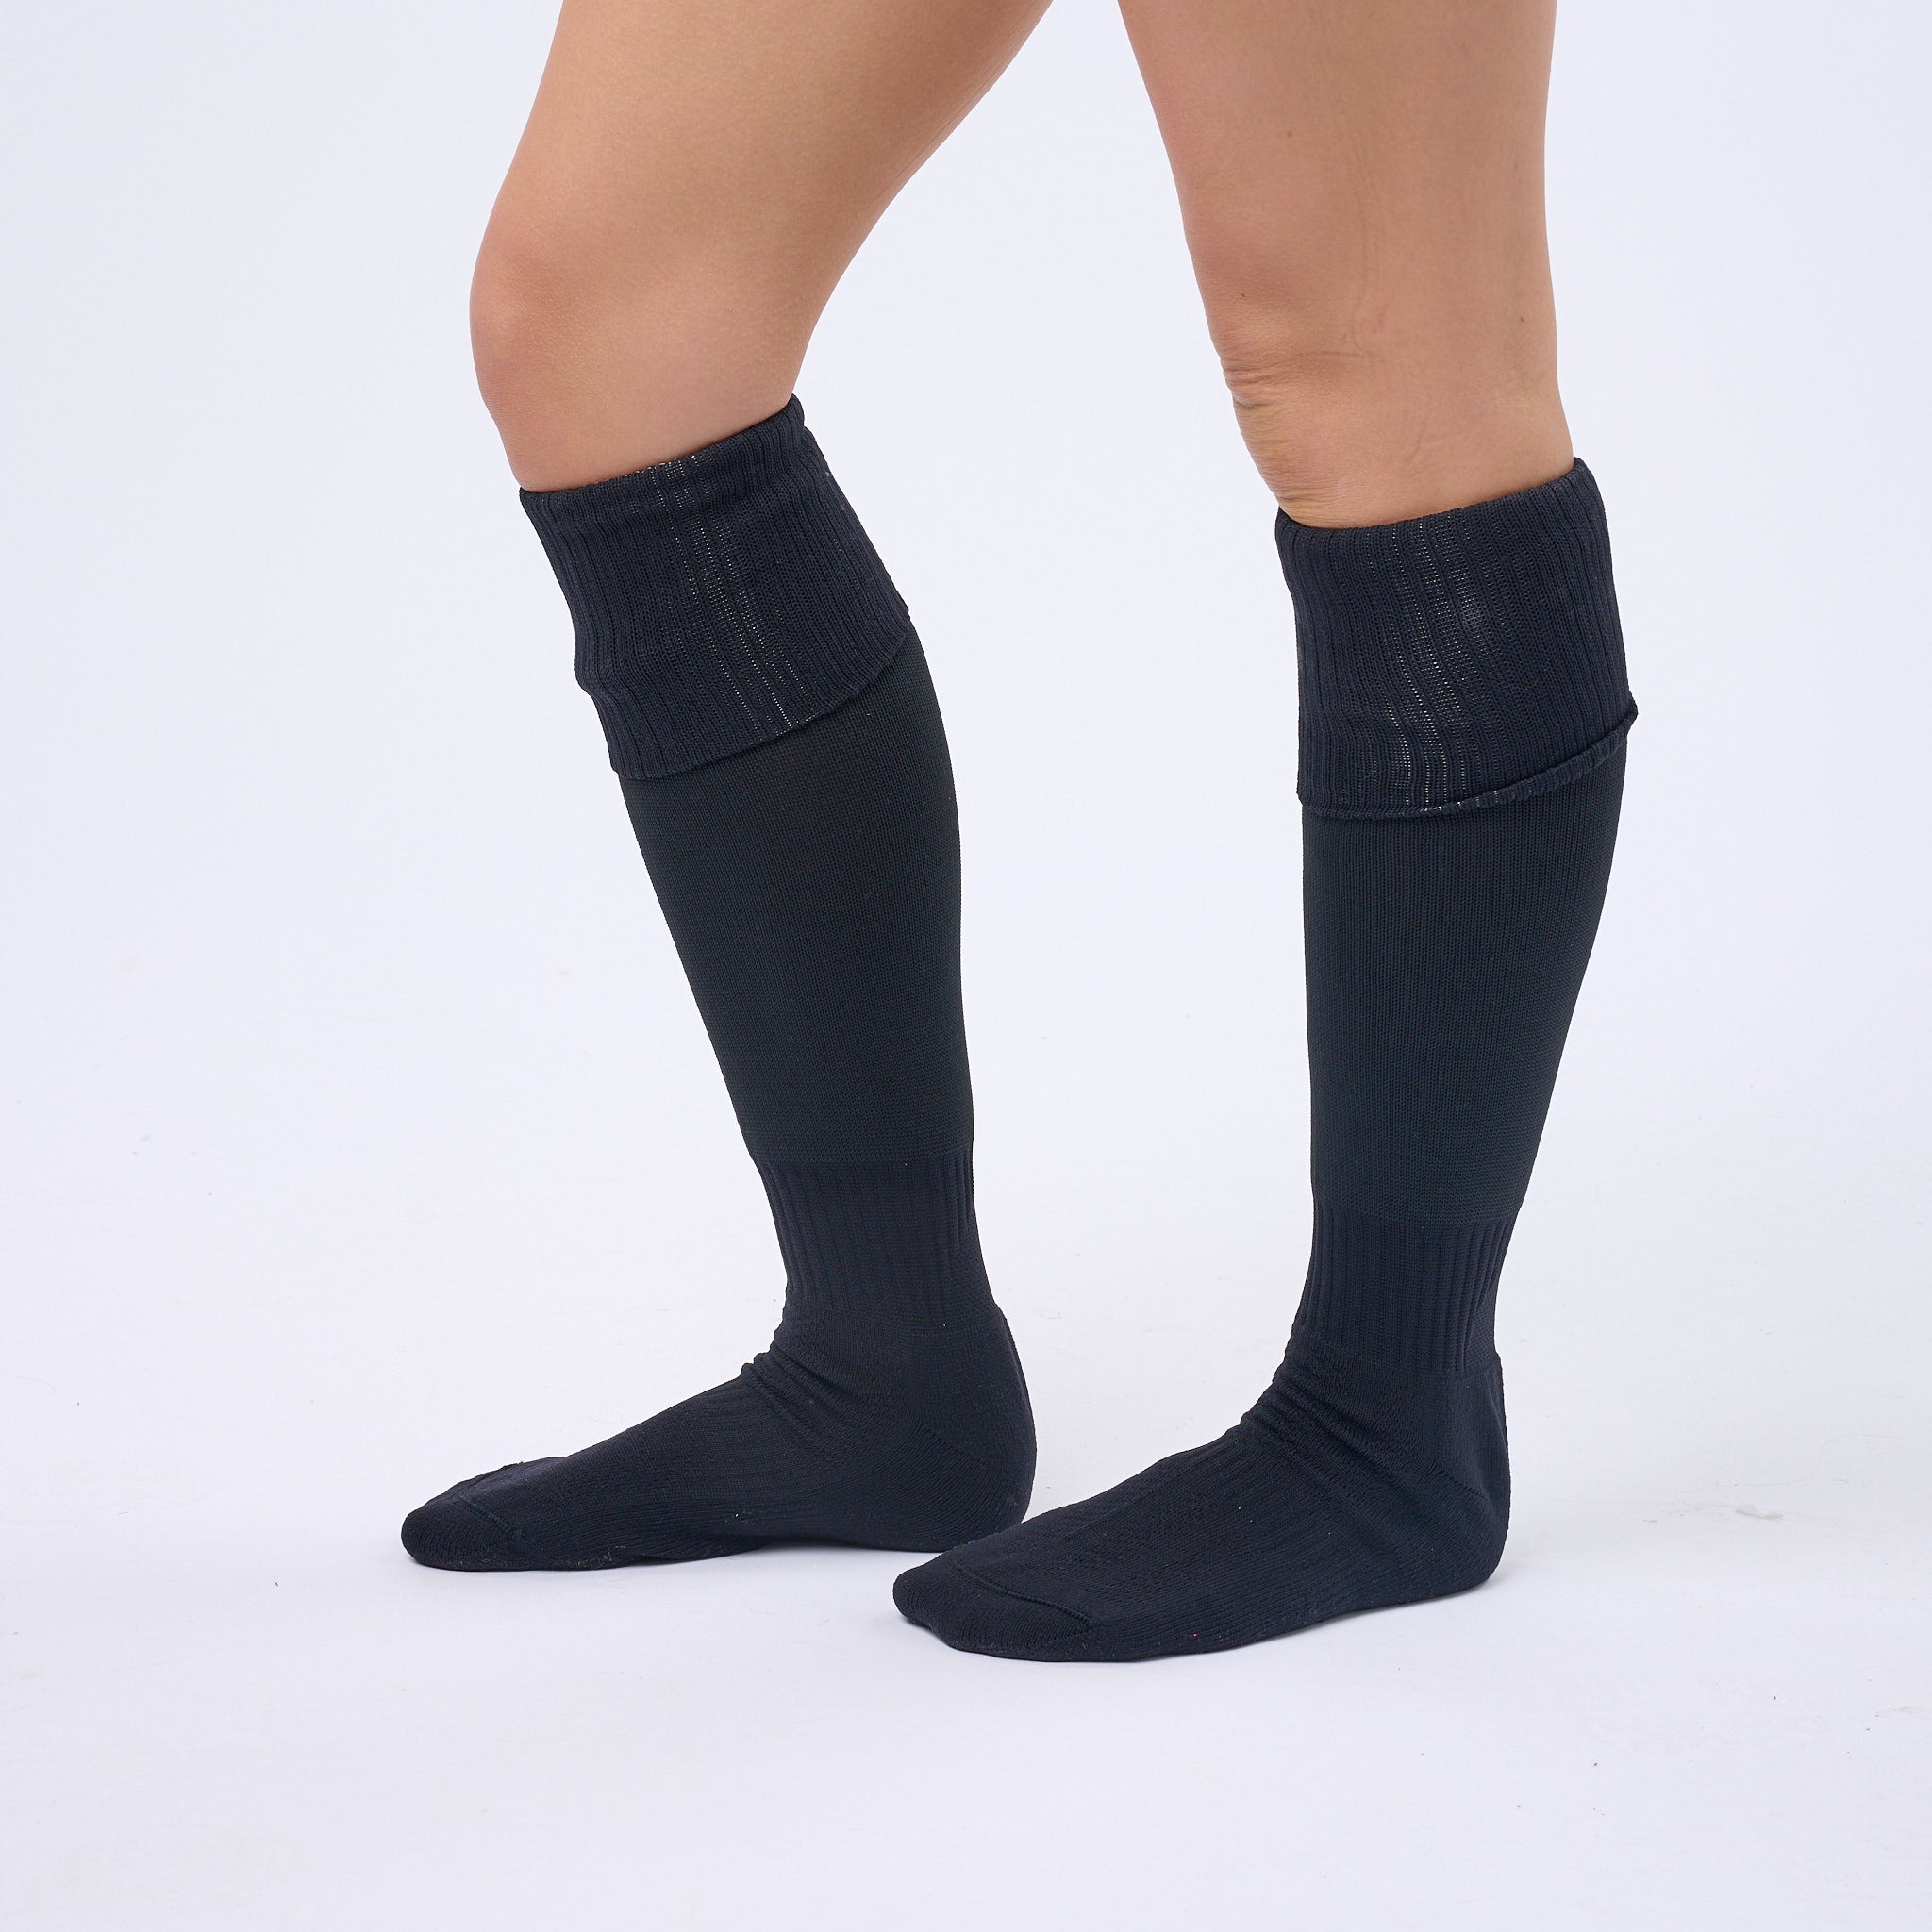 Omnitau Team Sports Core Sports Socks - Black